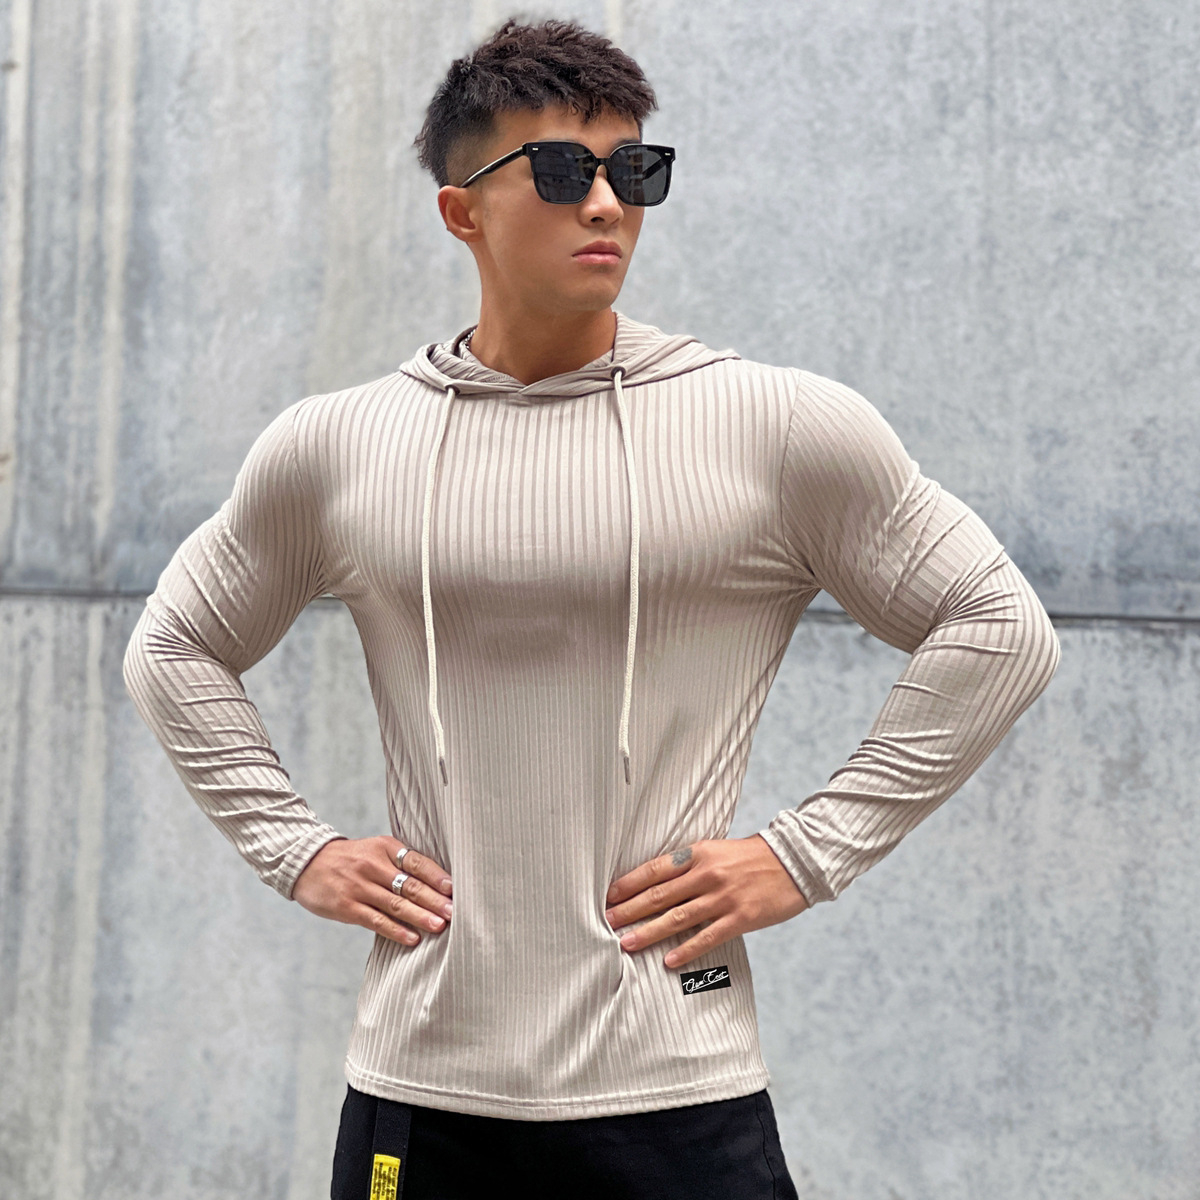 CX13 Men Sports Long Sleeve Shirts Half Zip Up Sweatshirt Fitness Jogging Tops Breathable Training Compression Running Tshirts